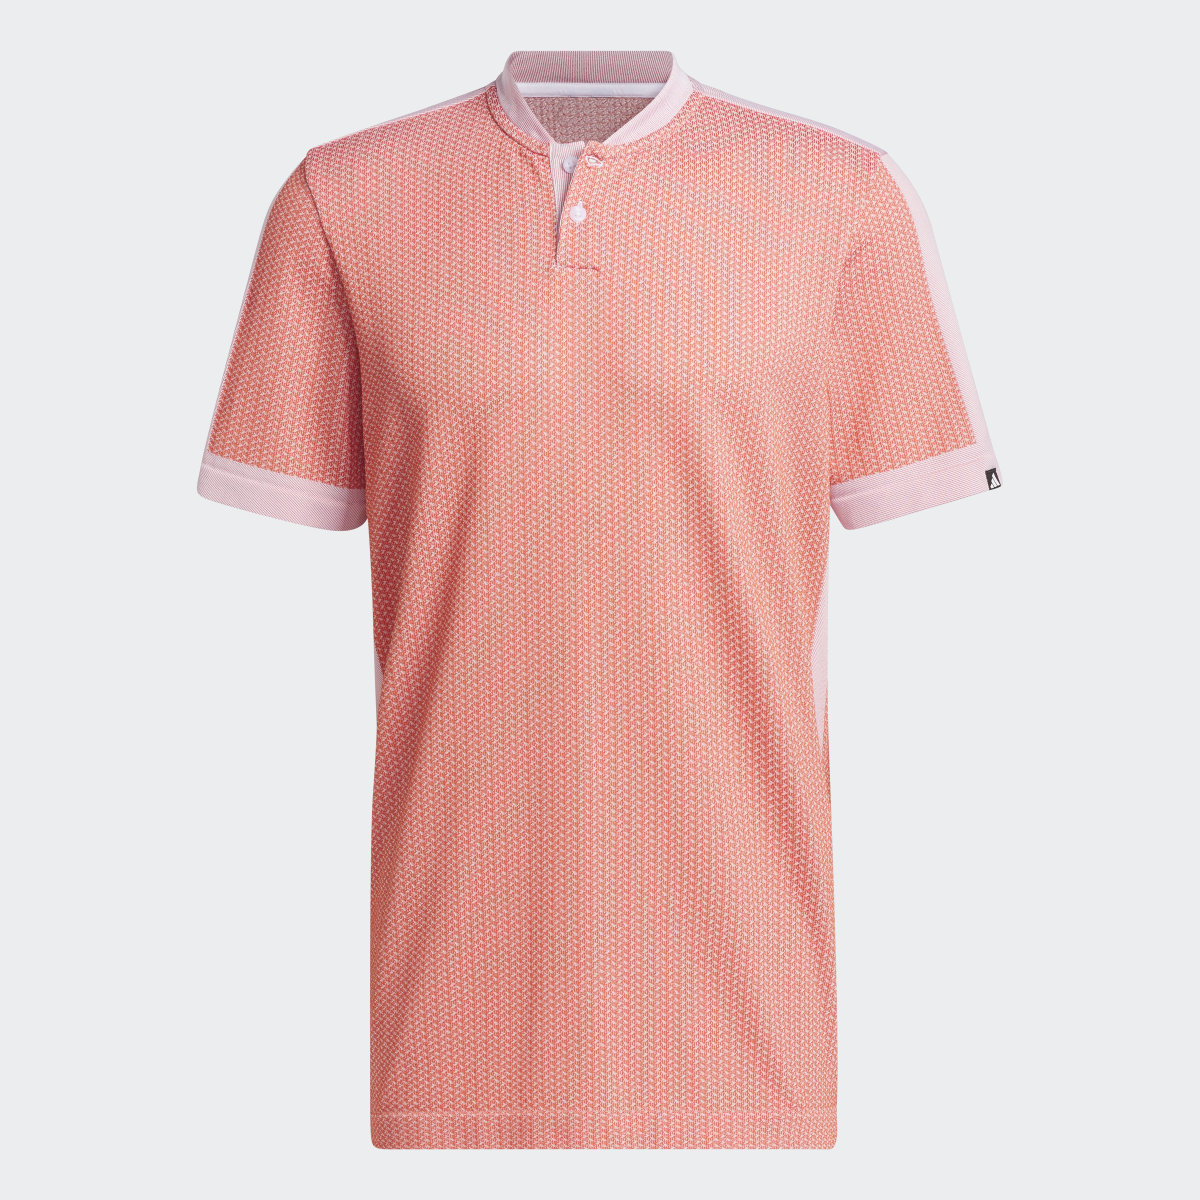 Adidas Ultimate365 Tour Textured PRIMEKNIT Golf Polo Shirt. 5